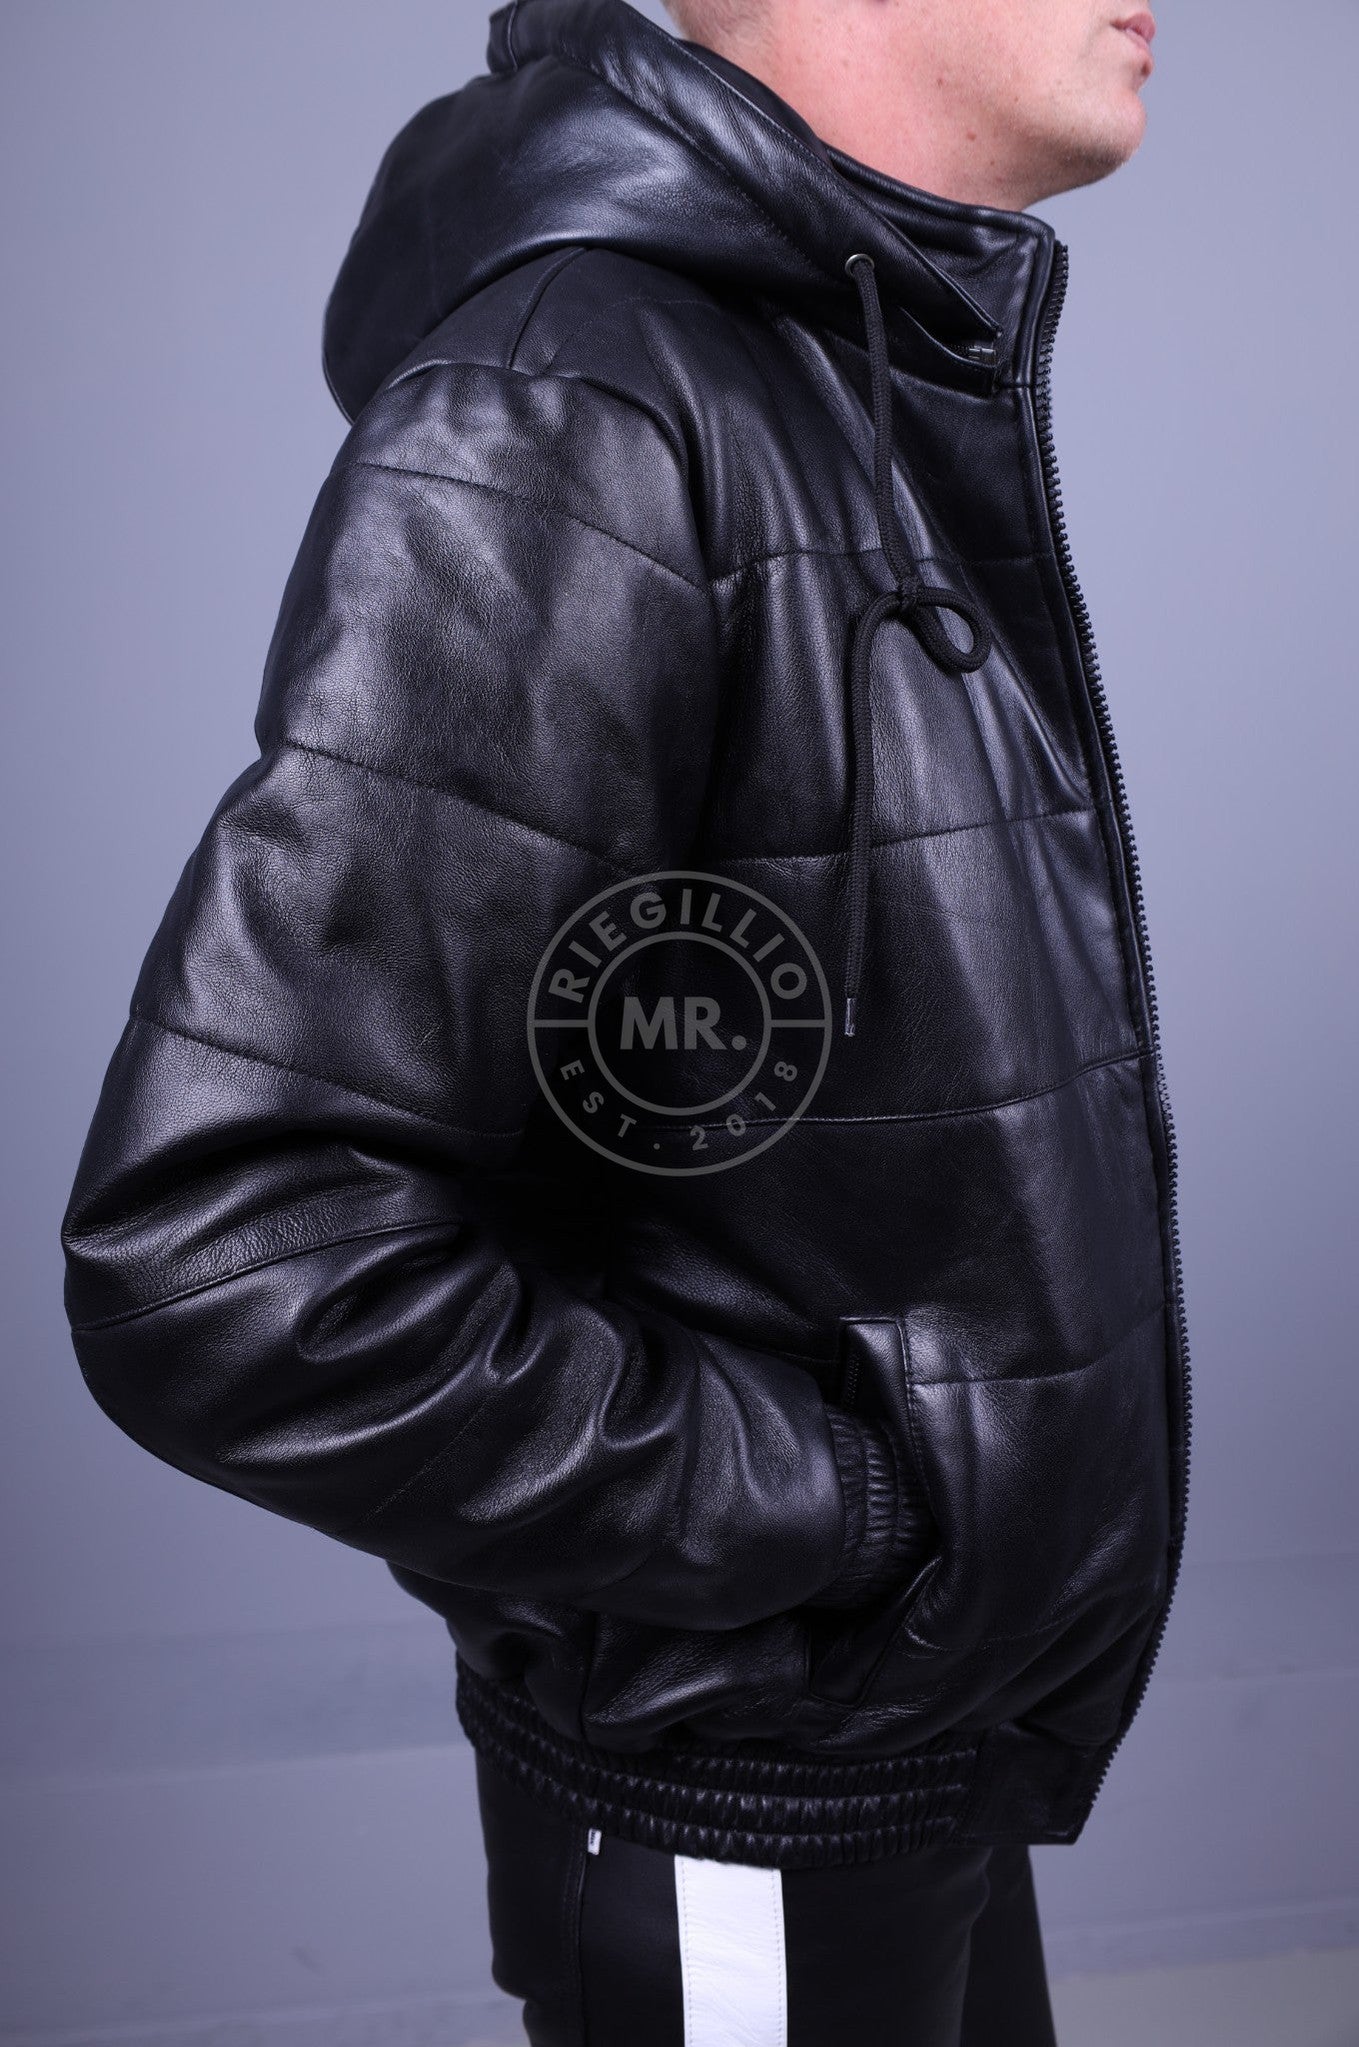 Black Leather Puffed Bomber Jacket at MR. Riegillio